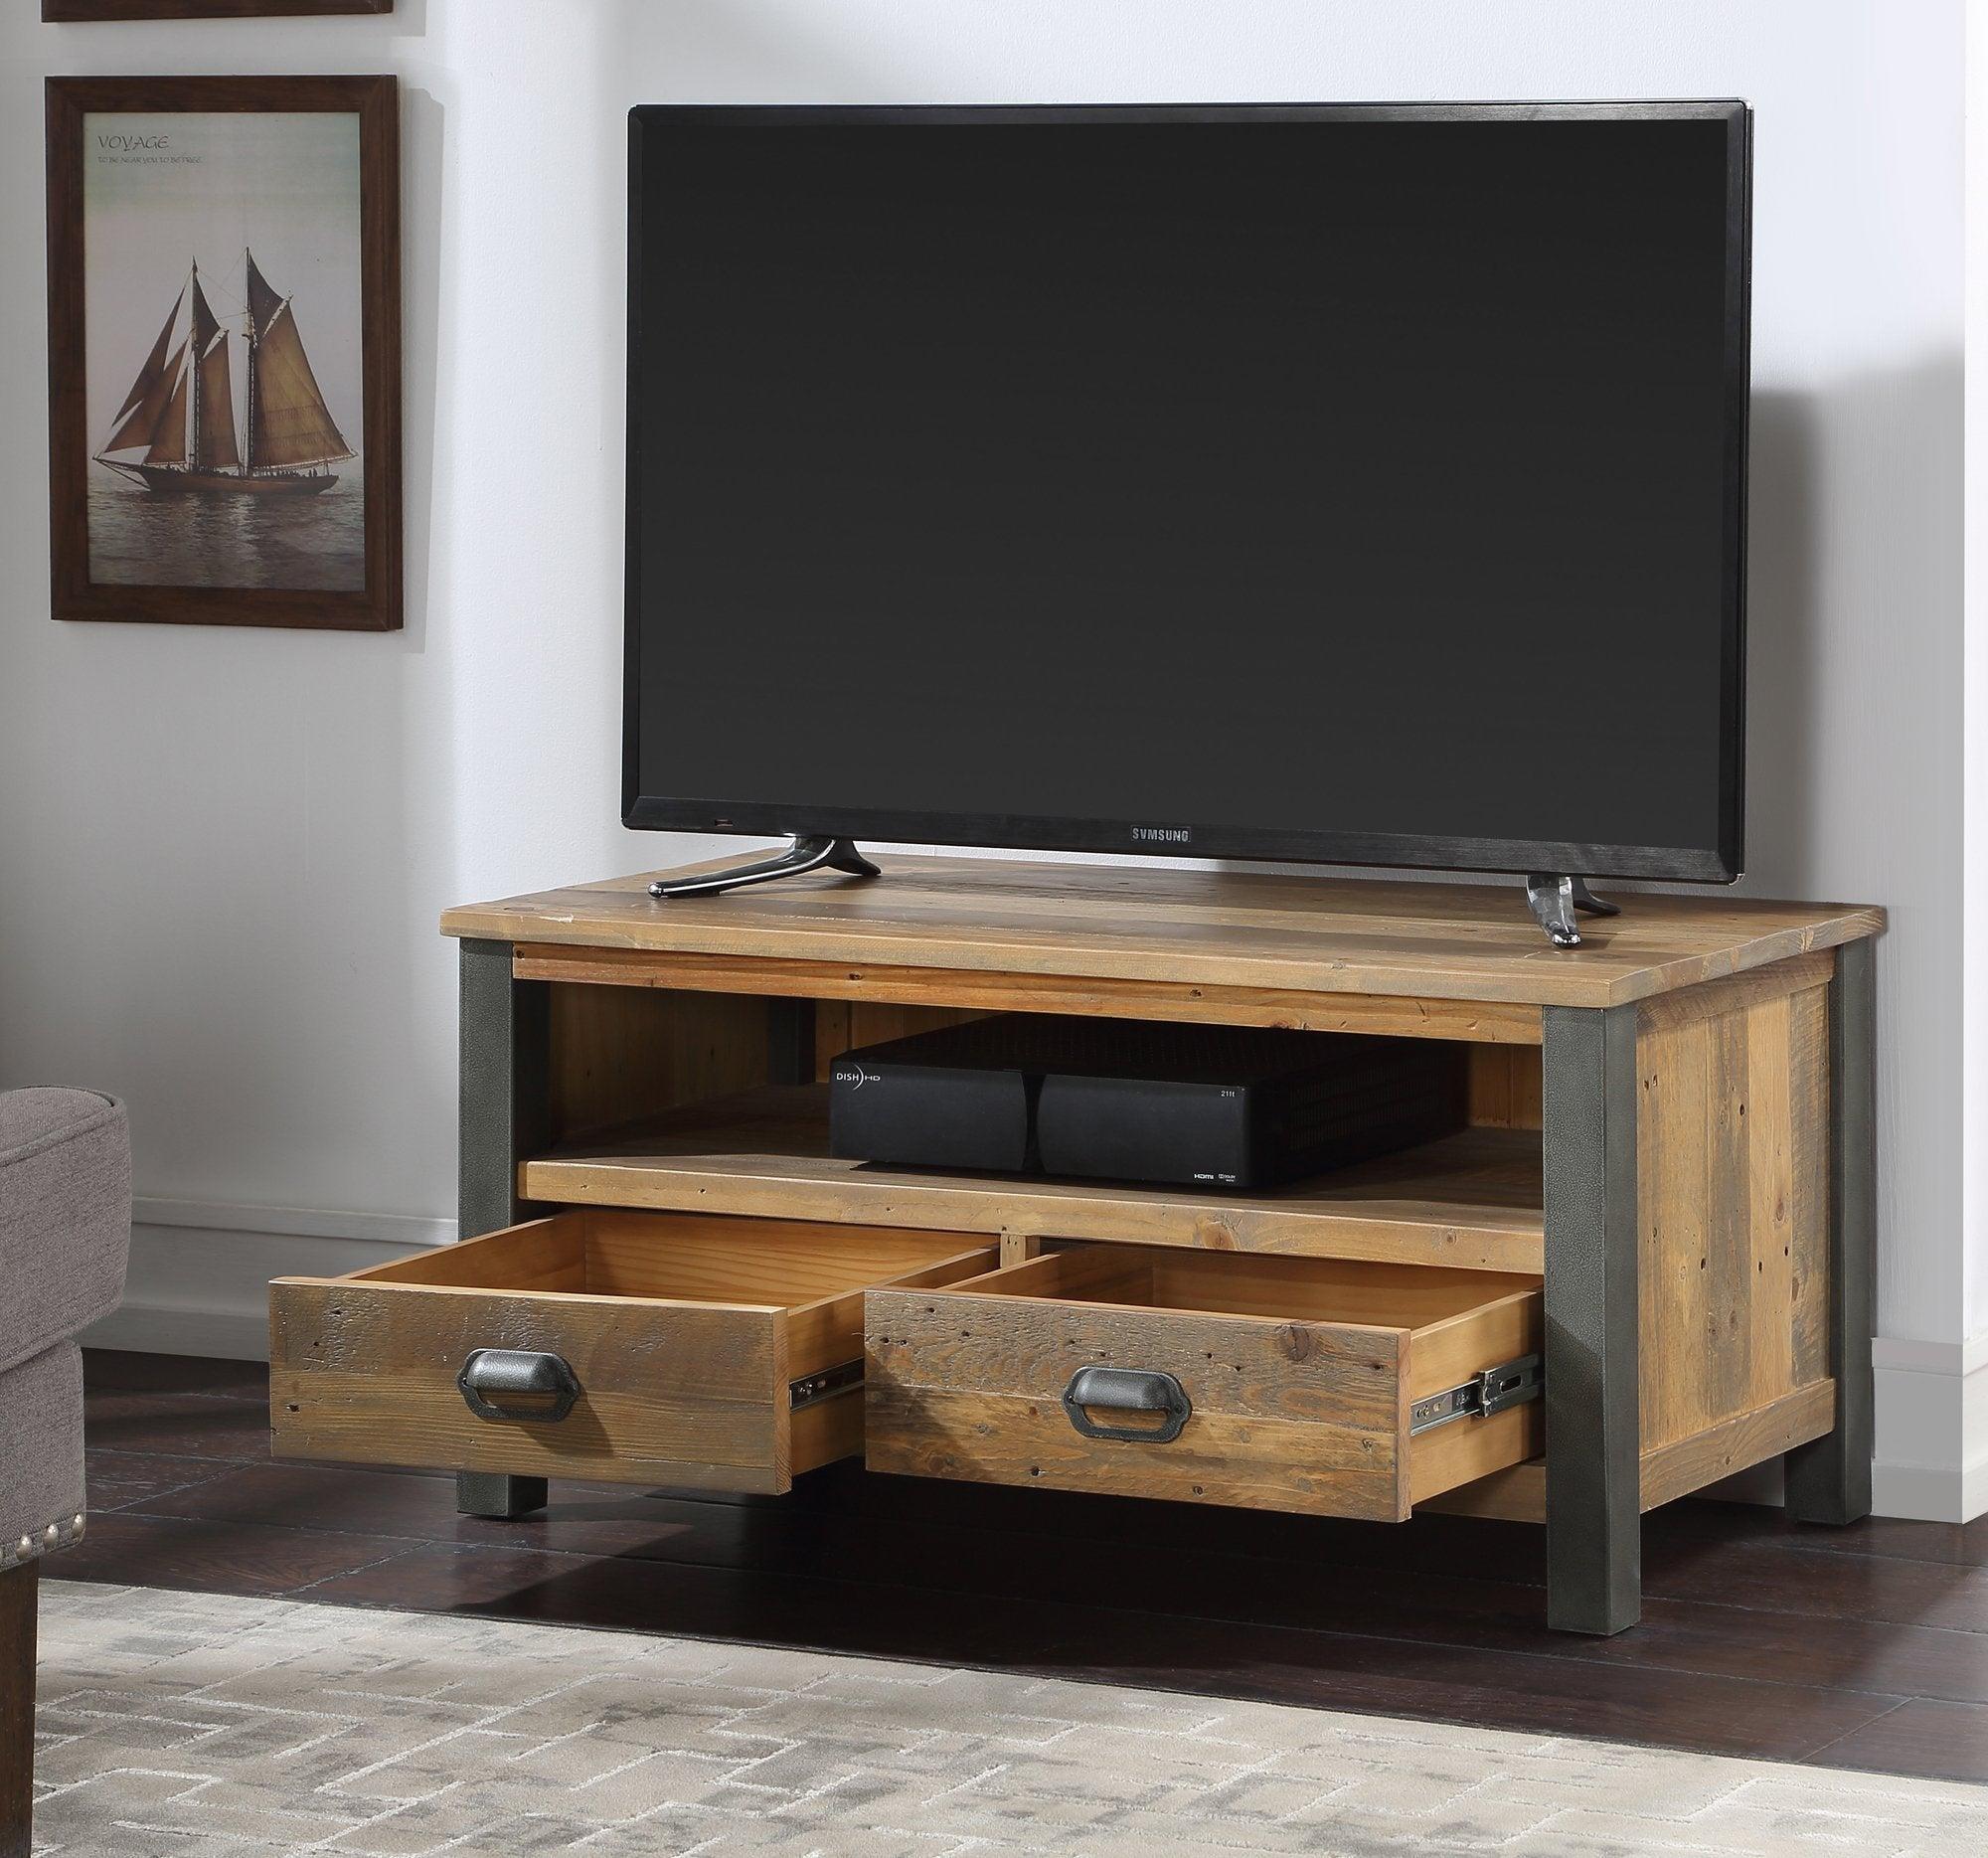 Urban elegance - reclaimed widescreen tv cabinet - crimblefest furniture - image 2